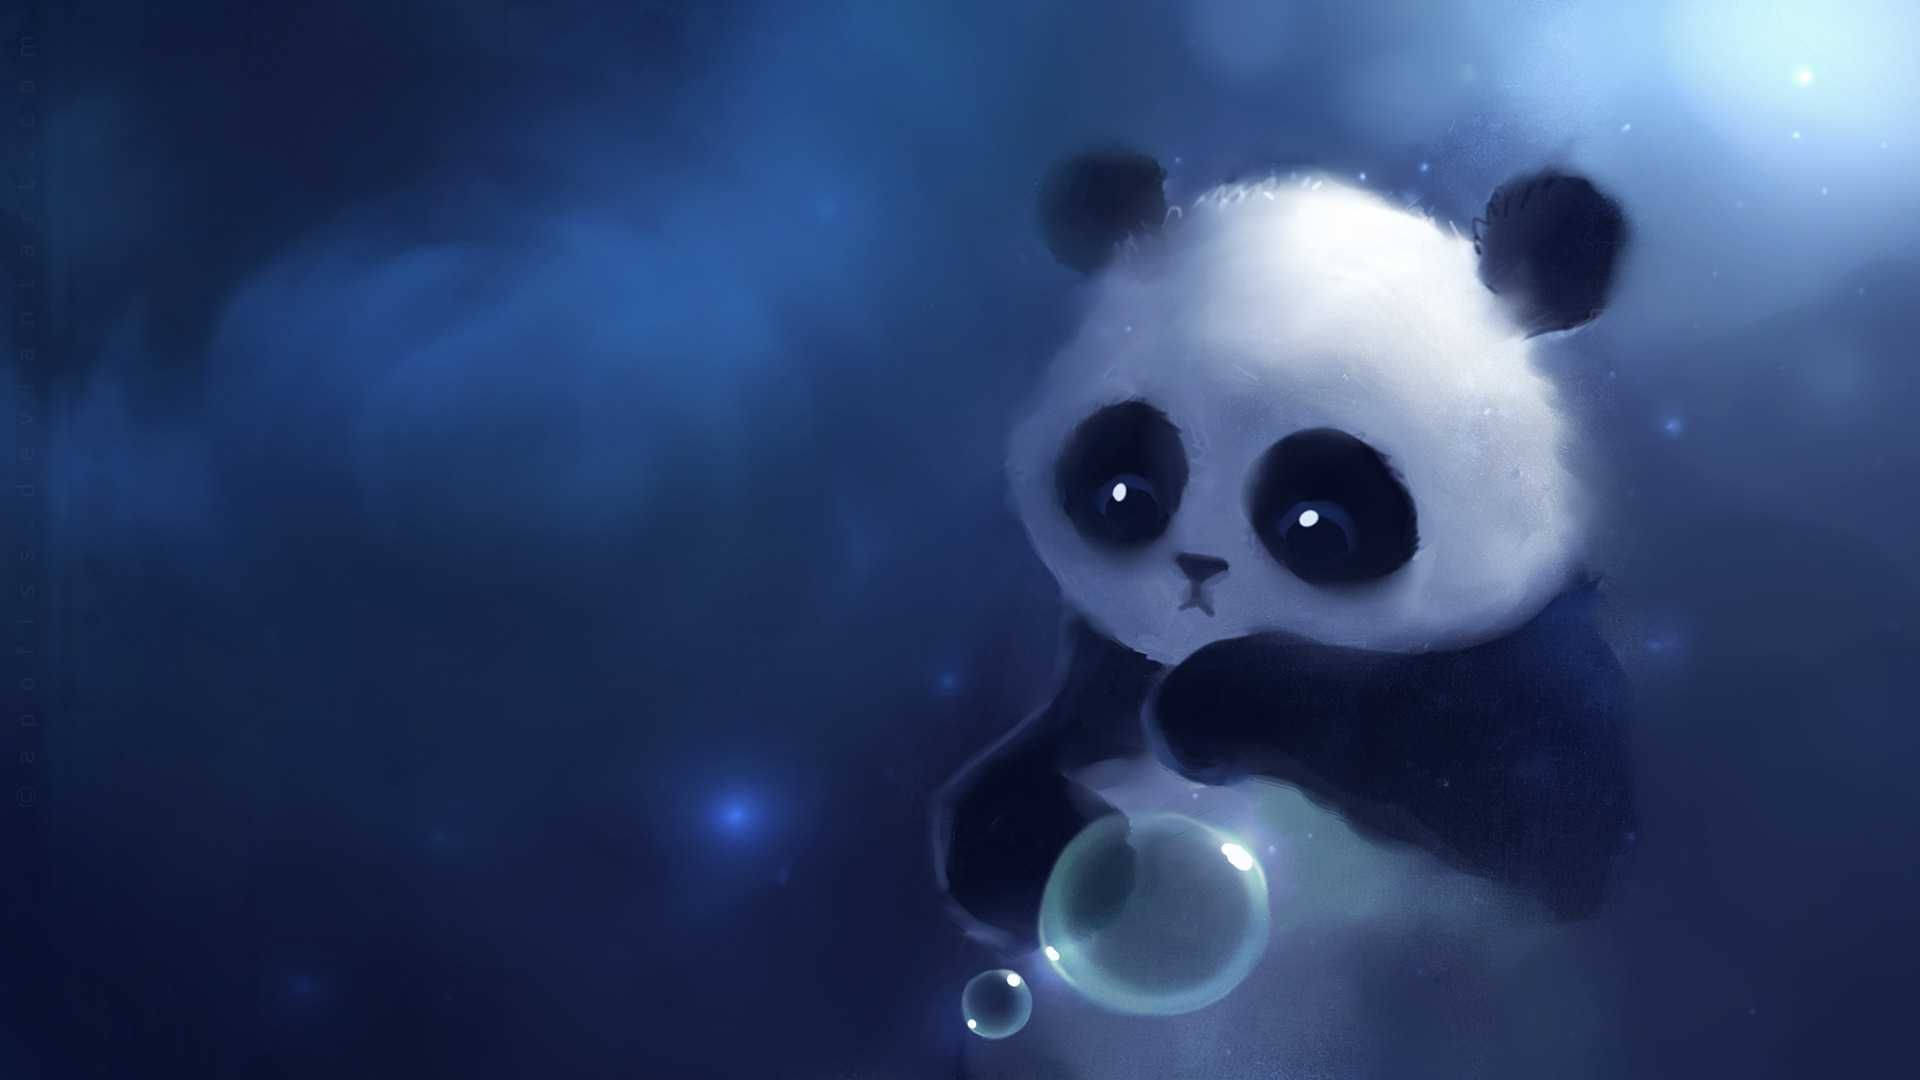 Pandacartoon Tier Malerei Wallpaper